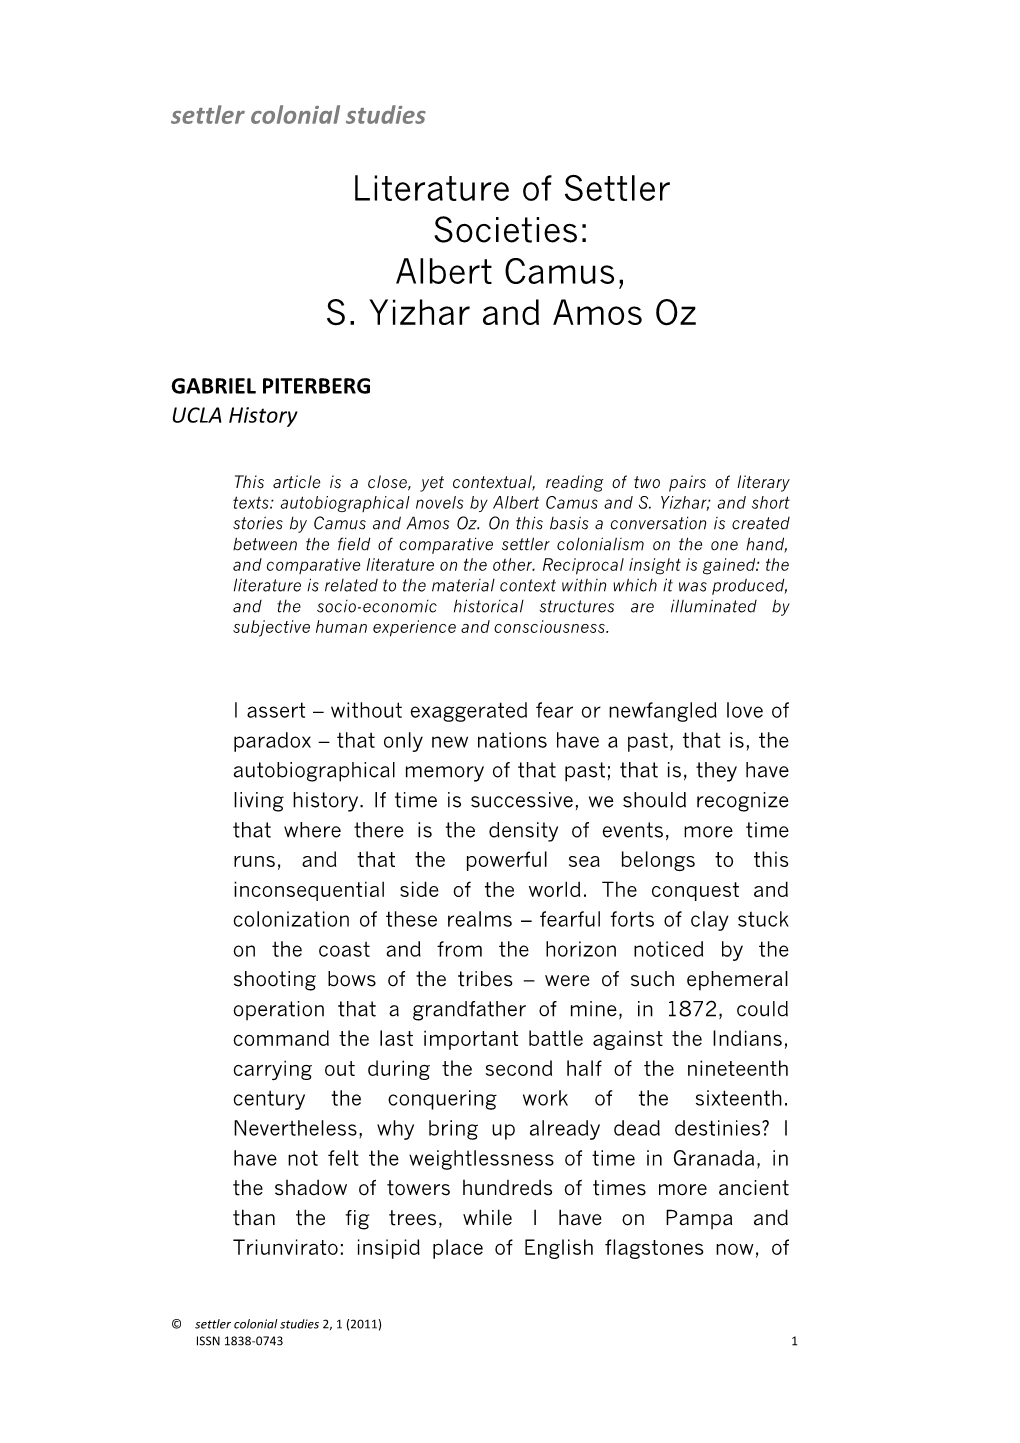 Literature of Settler Societies: Albert Camus, S. Yizhar and Amos Oz